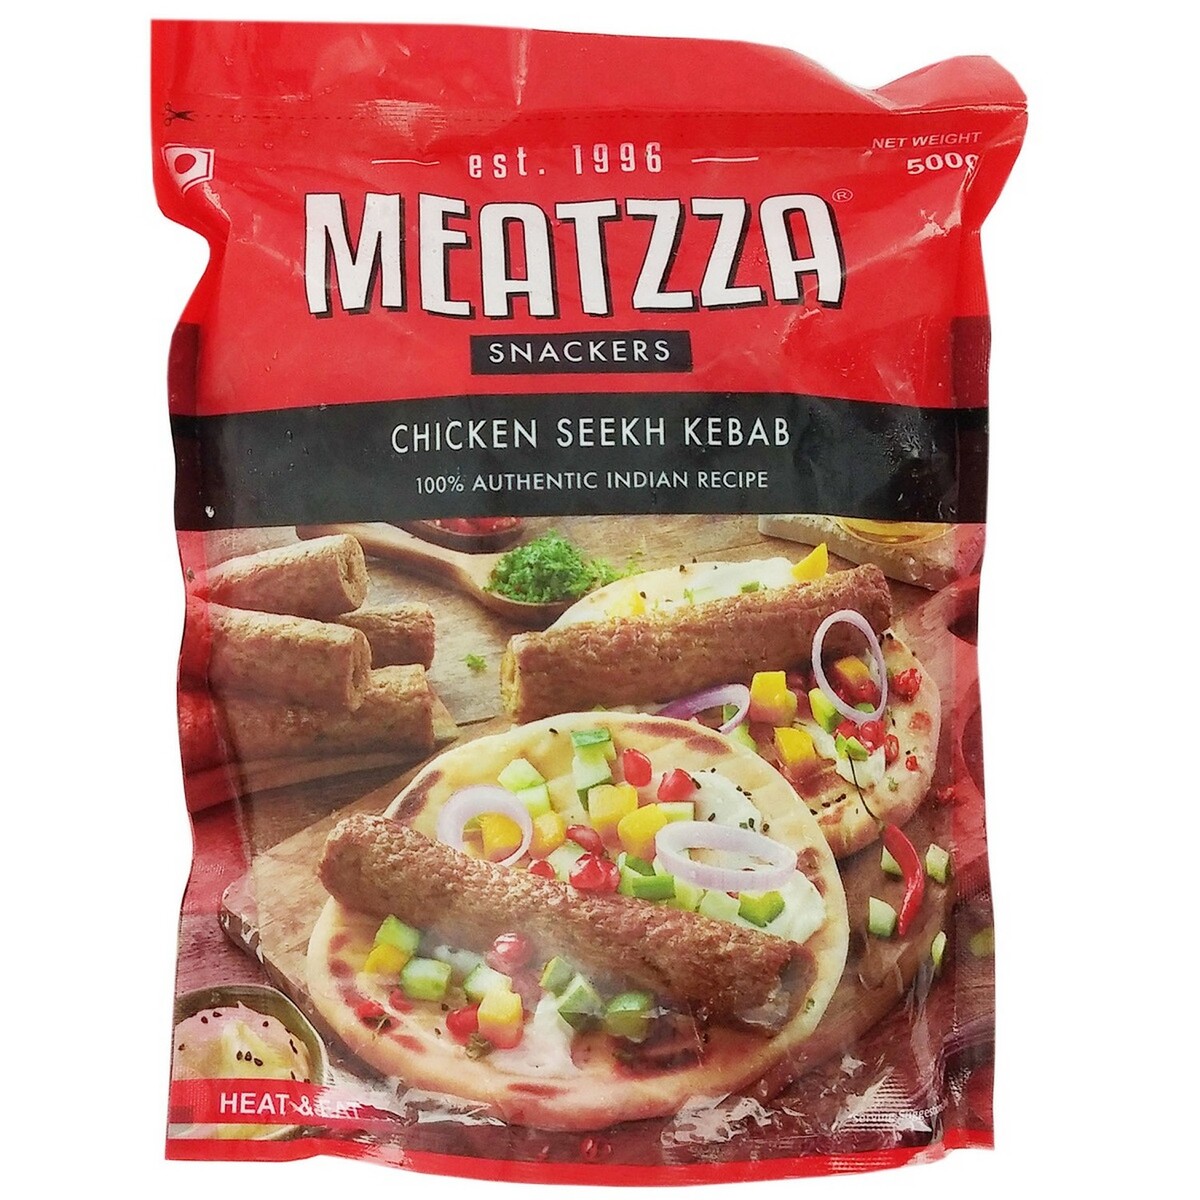 Meatzza Chicken Seekh Kebab 500g